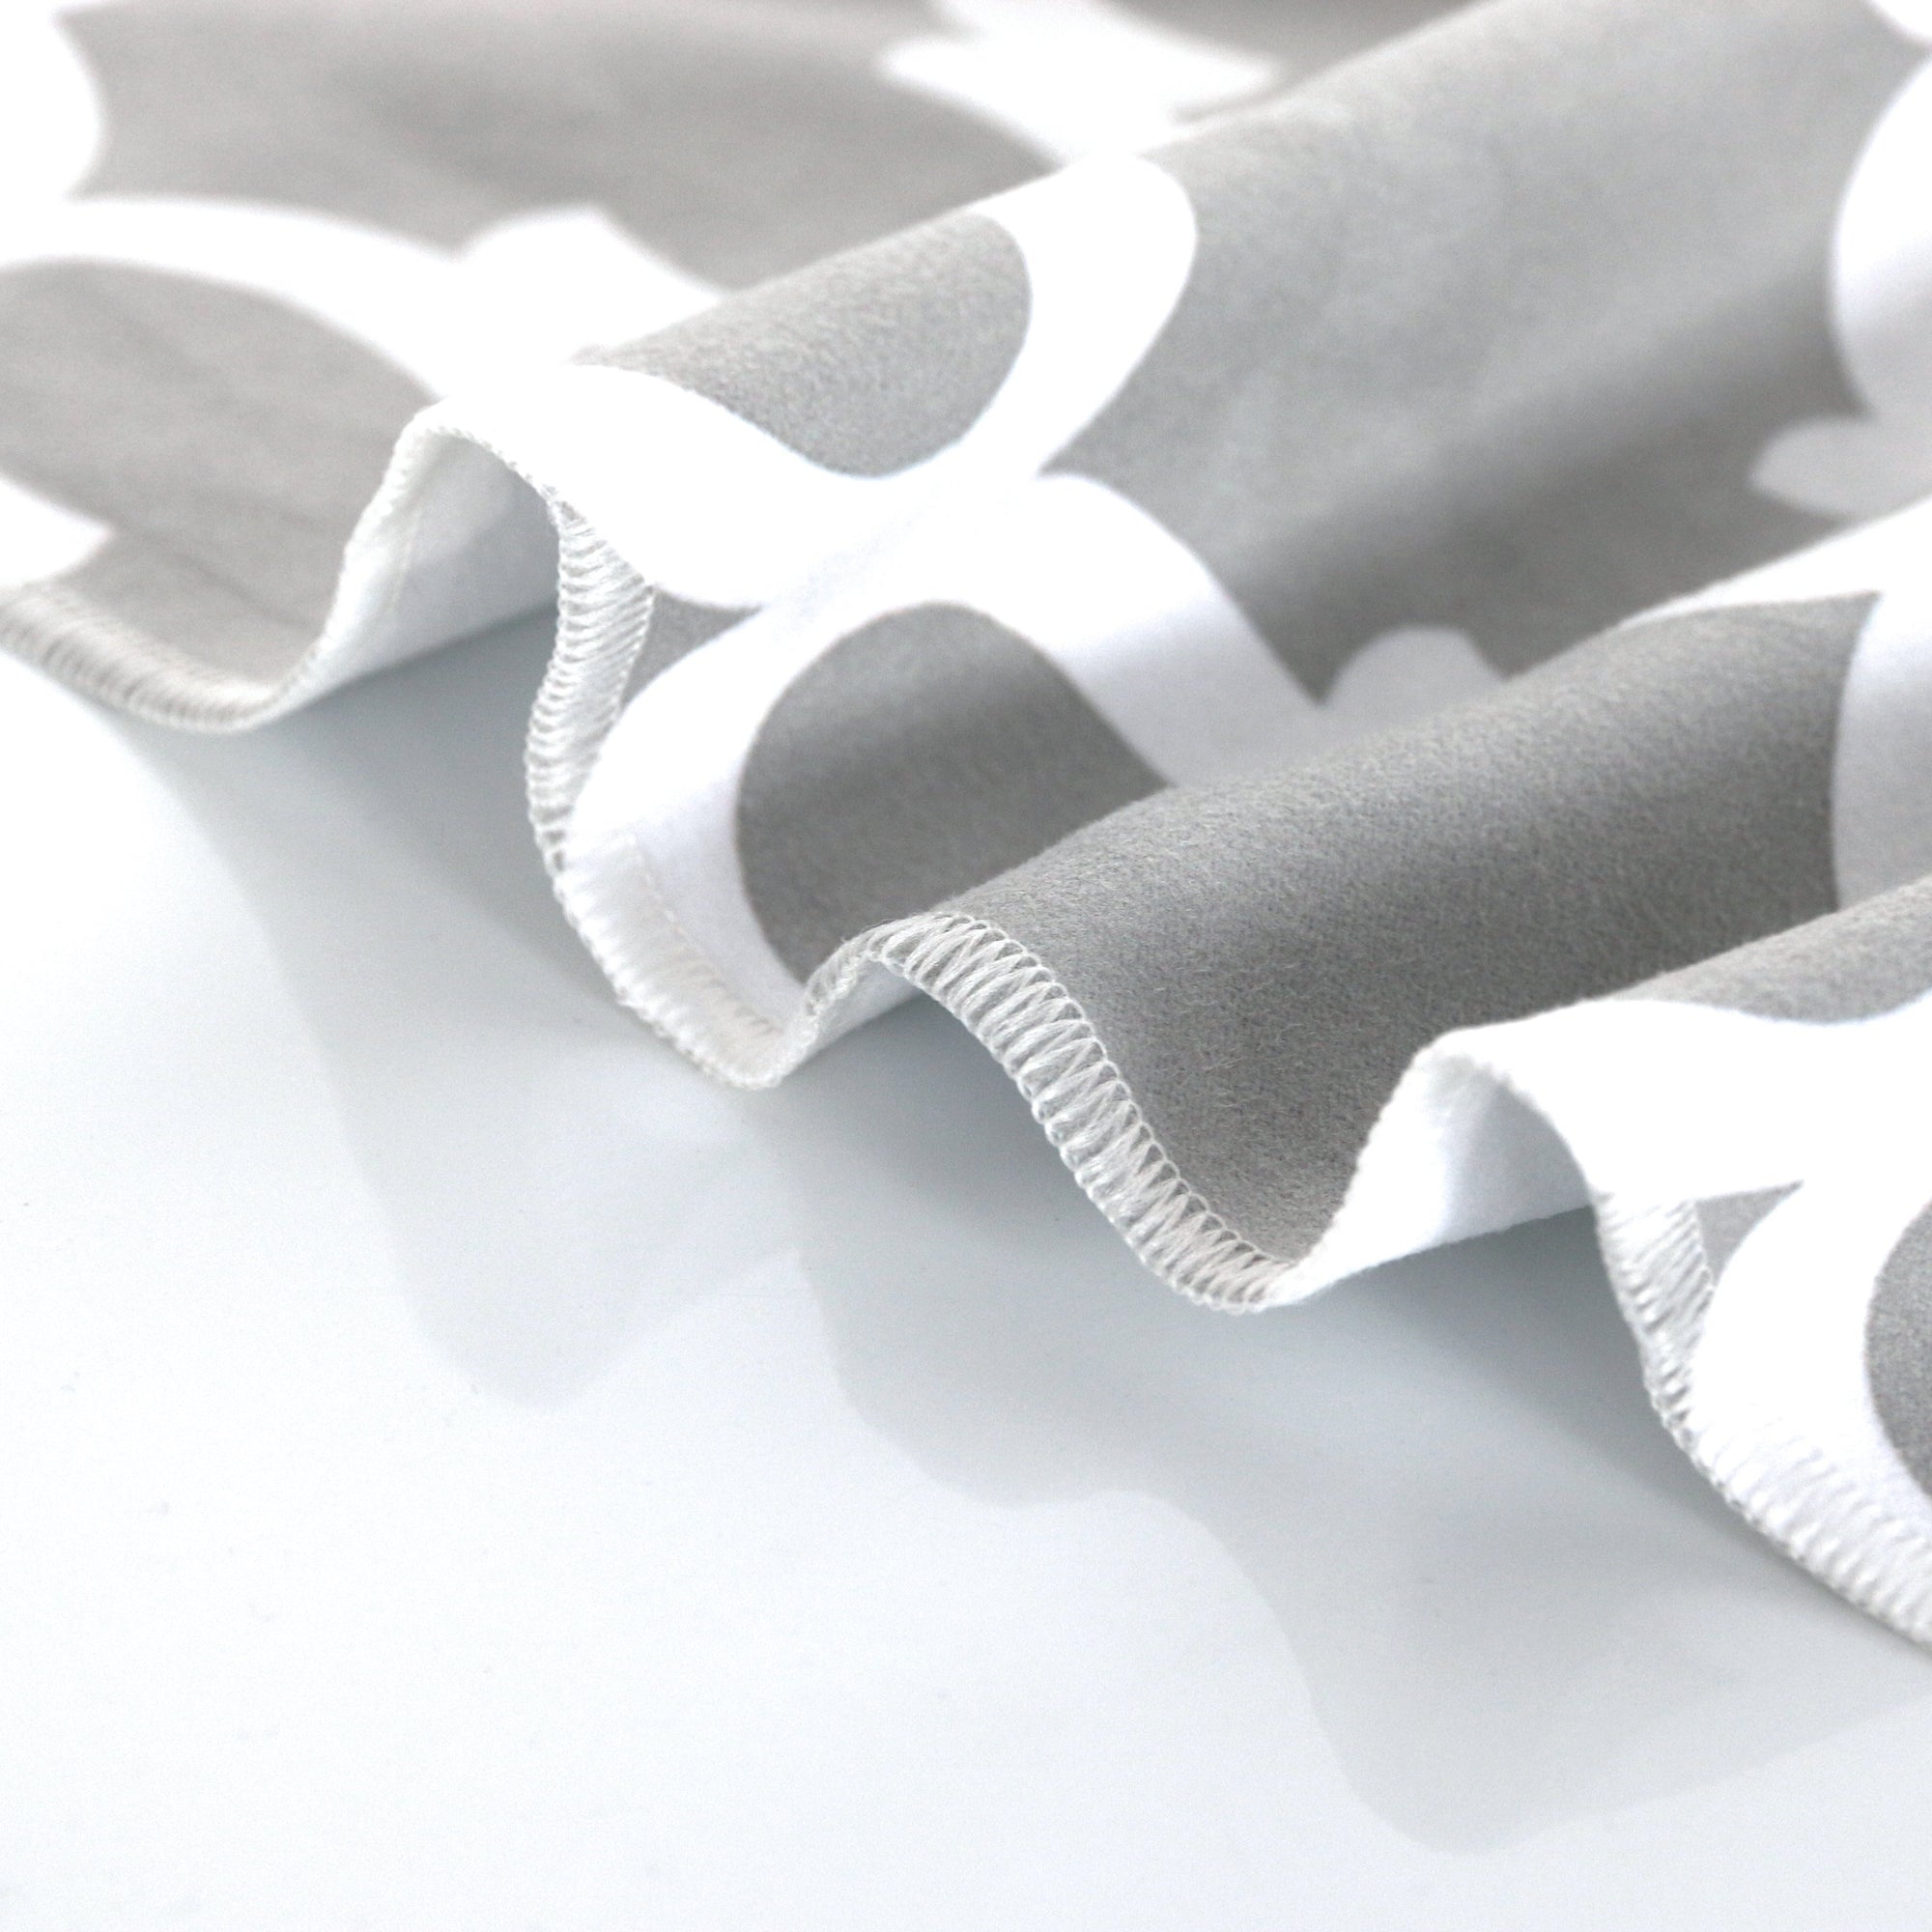 Premier Prints Fynn Black Canvas Fabric - Drapery Décor Fabric